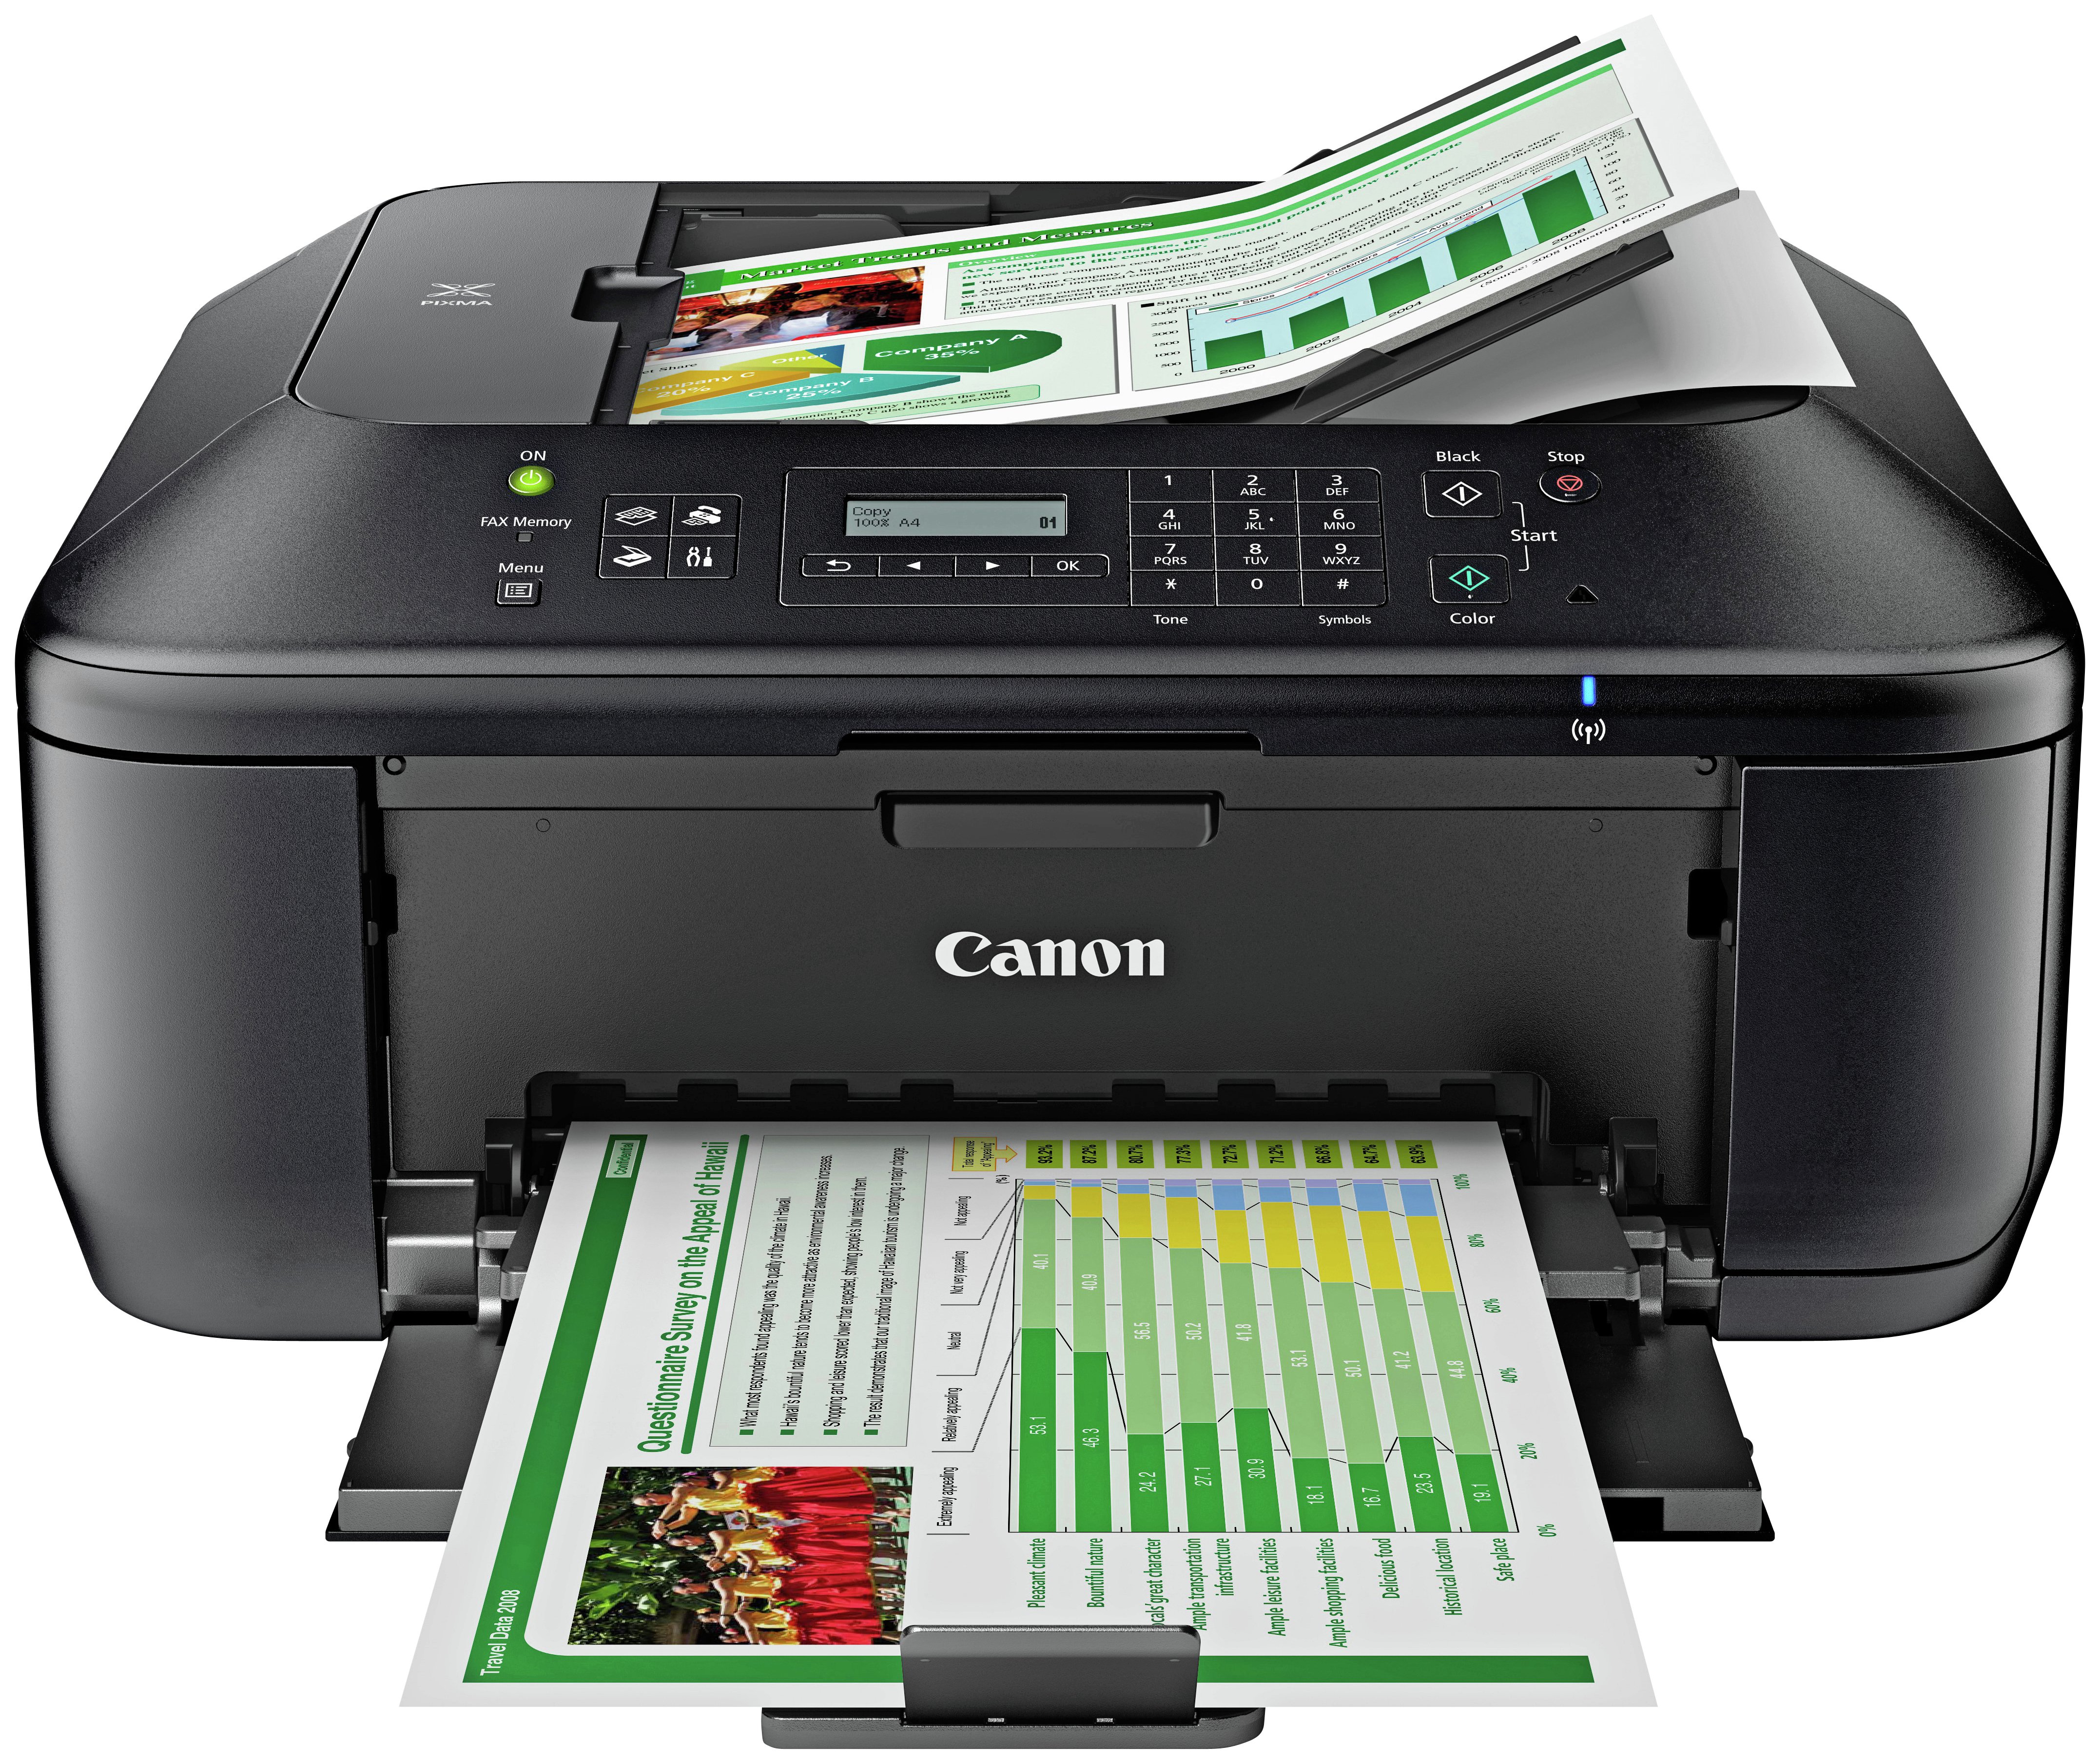 Canon PIXMA MX475 Wireless Inkjet Printer Review